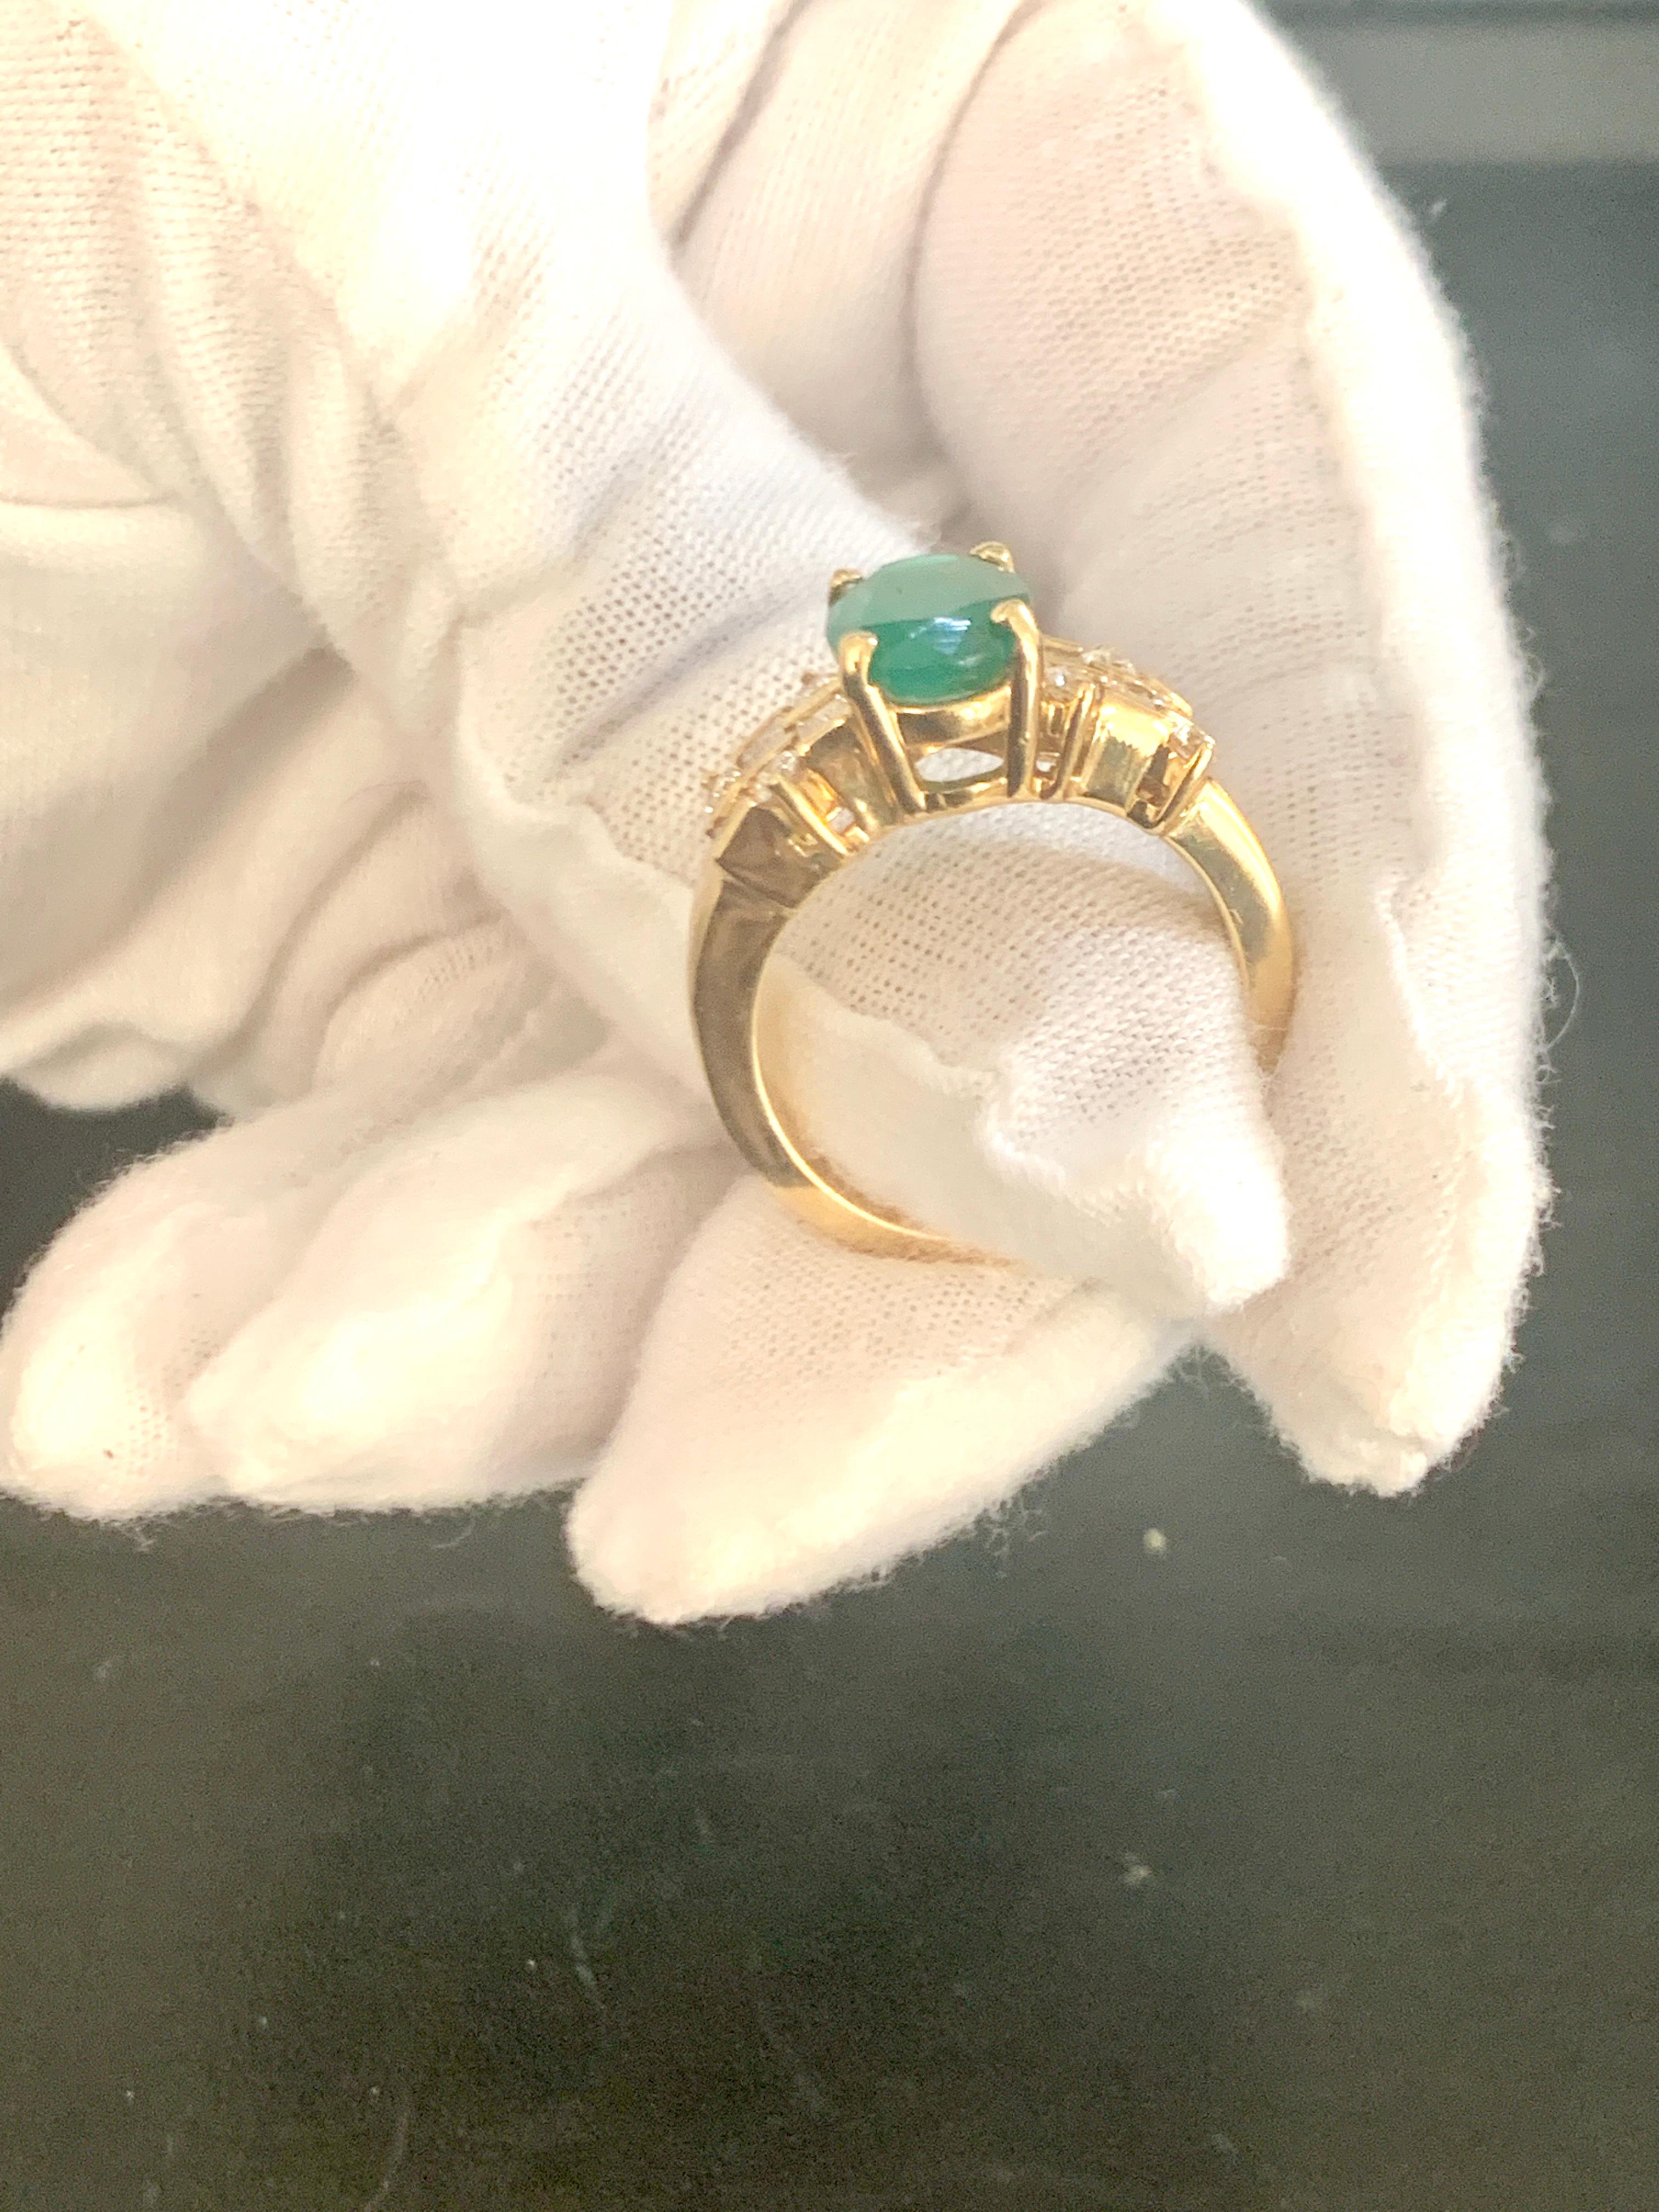 2 Carat Oval Cut Emerald and 0.5 Carat Diamond Ring 18 Karat Yellow Gold For Sale 2